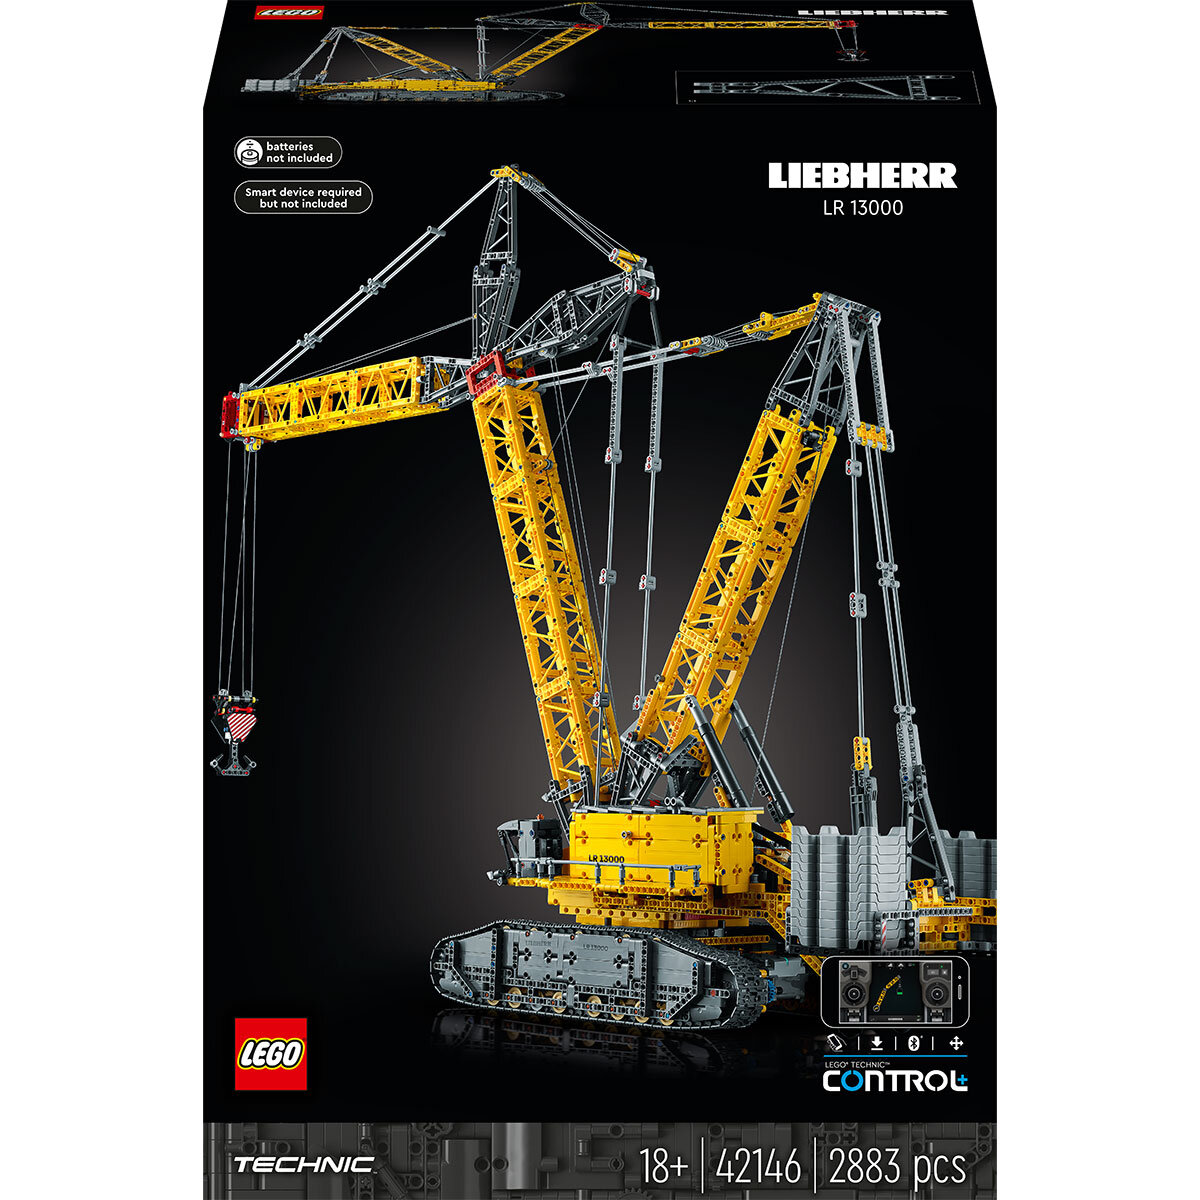 Buy  LEGO Technic Liebherr Crawler Crane LR 13000 Parts Image at Costco.co.uk